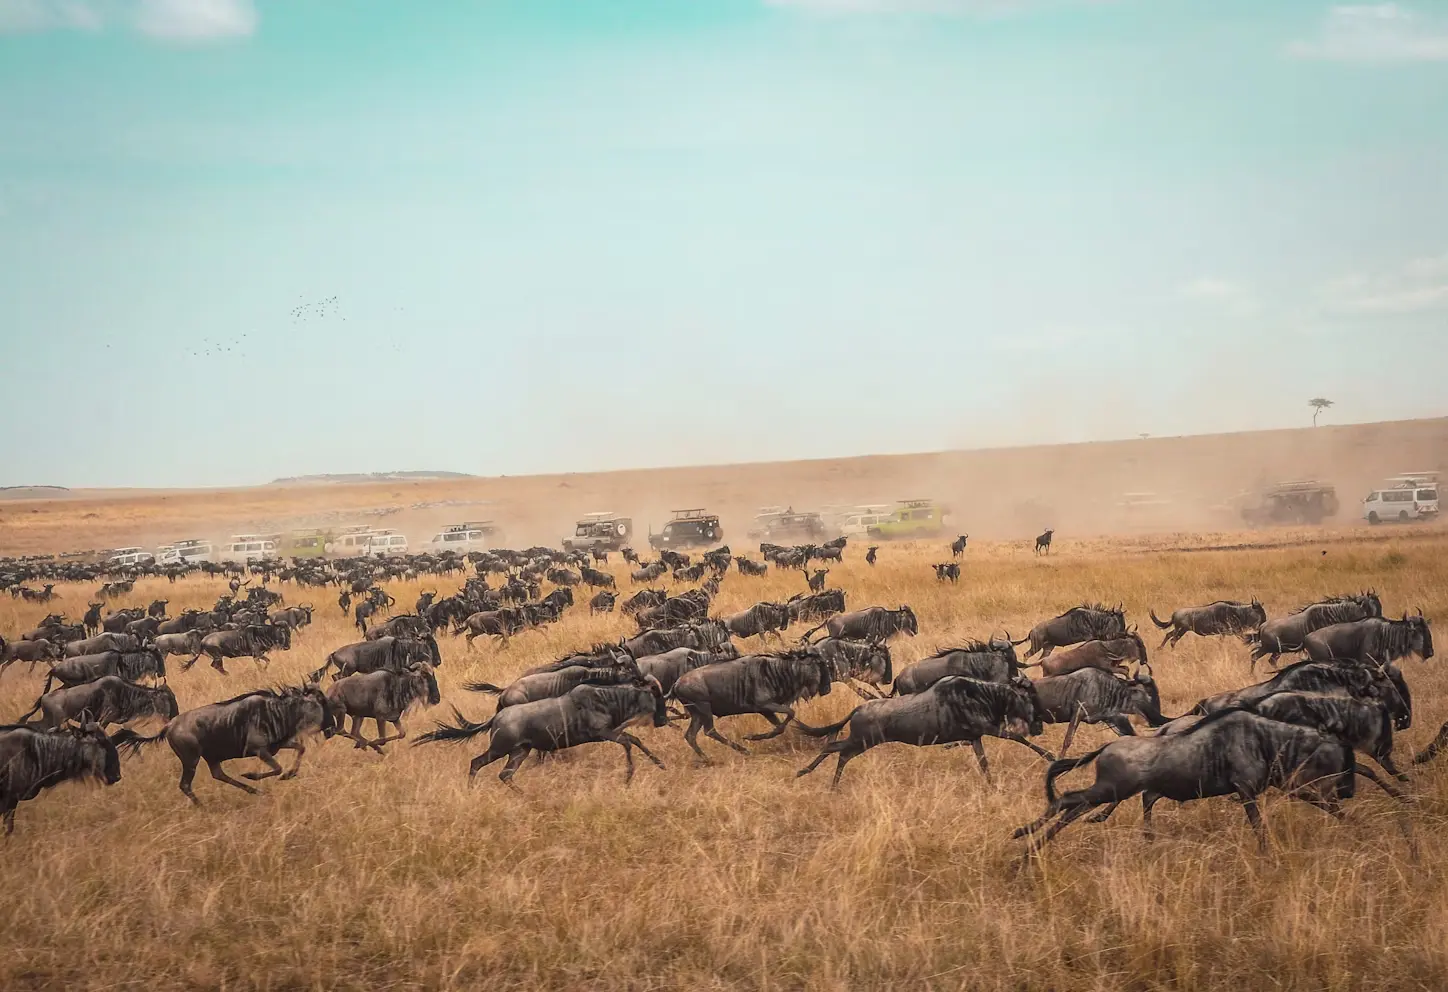 The great migration in Masai Mara National Reserve, Kenya